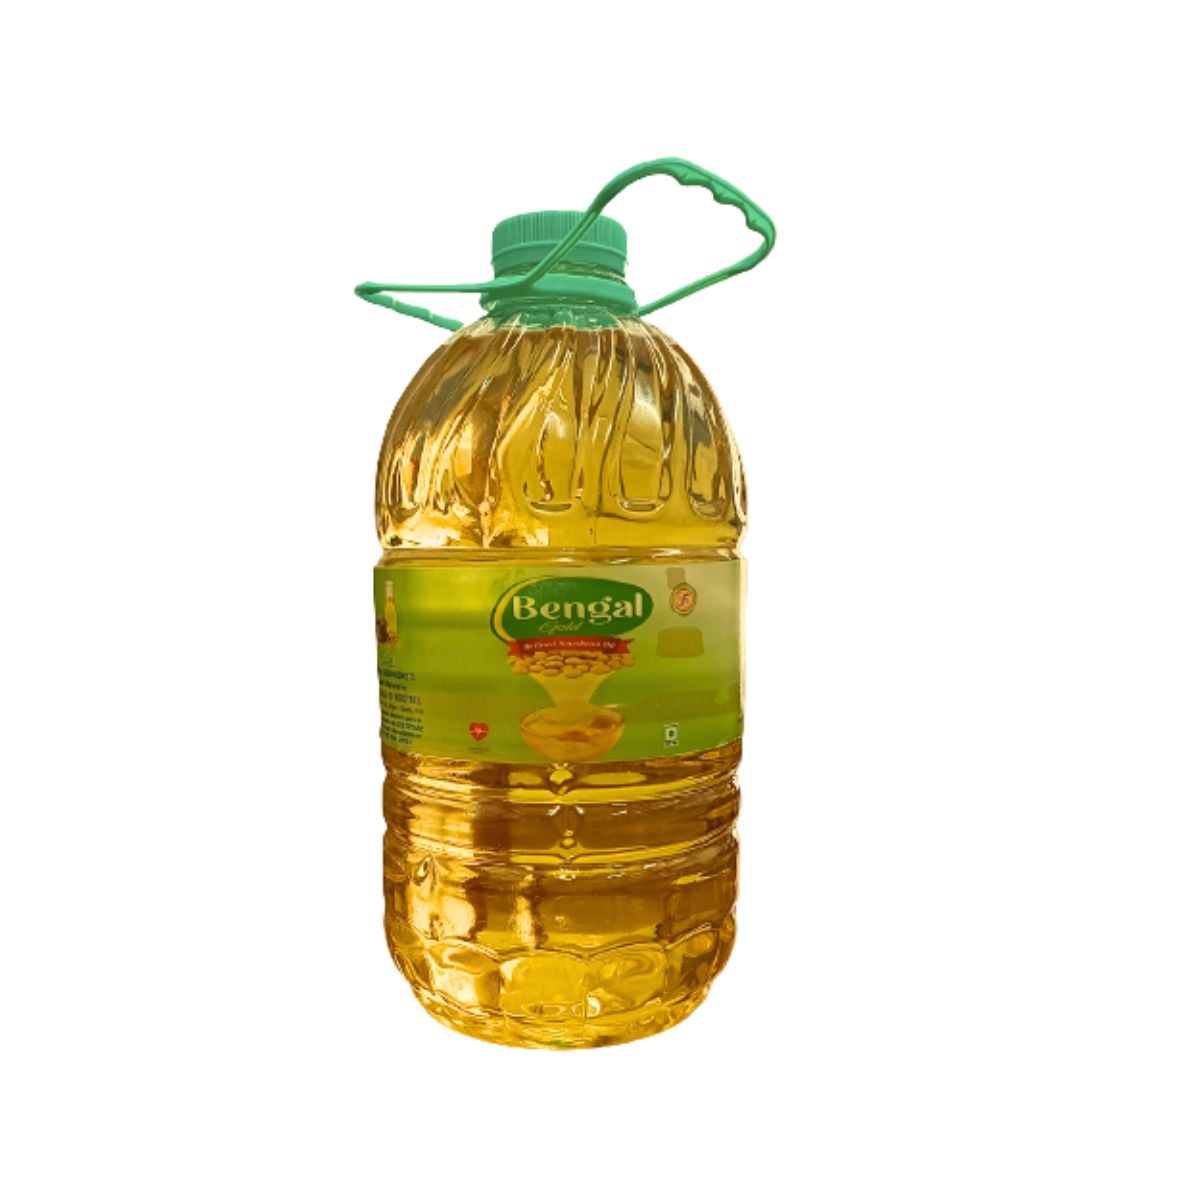 Bengal Gold Refined Soya Bean Oil - 3750ml